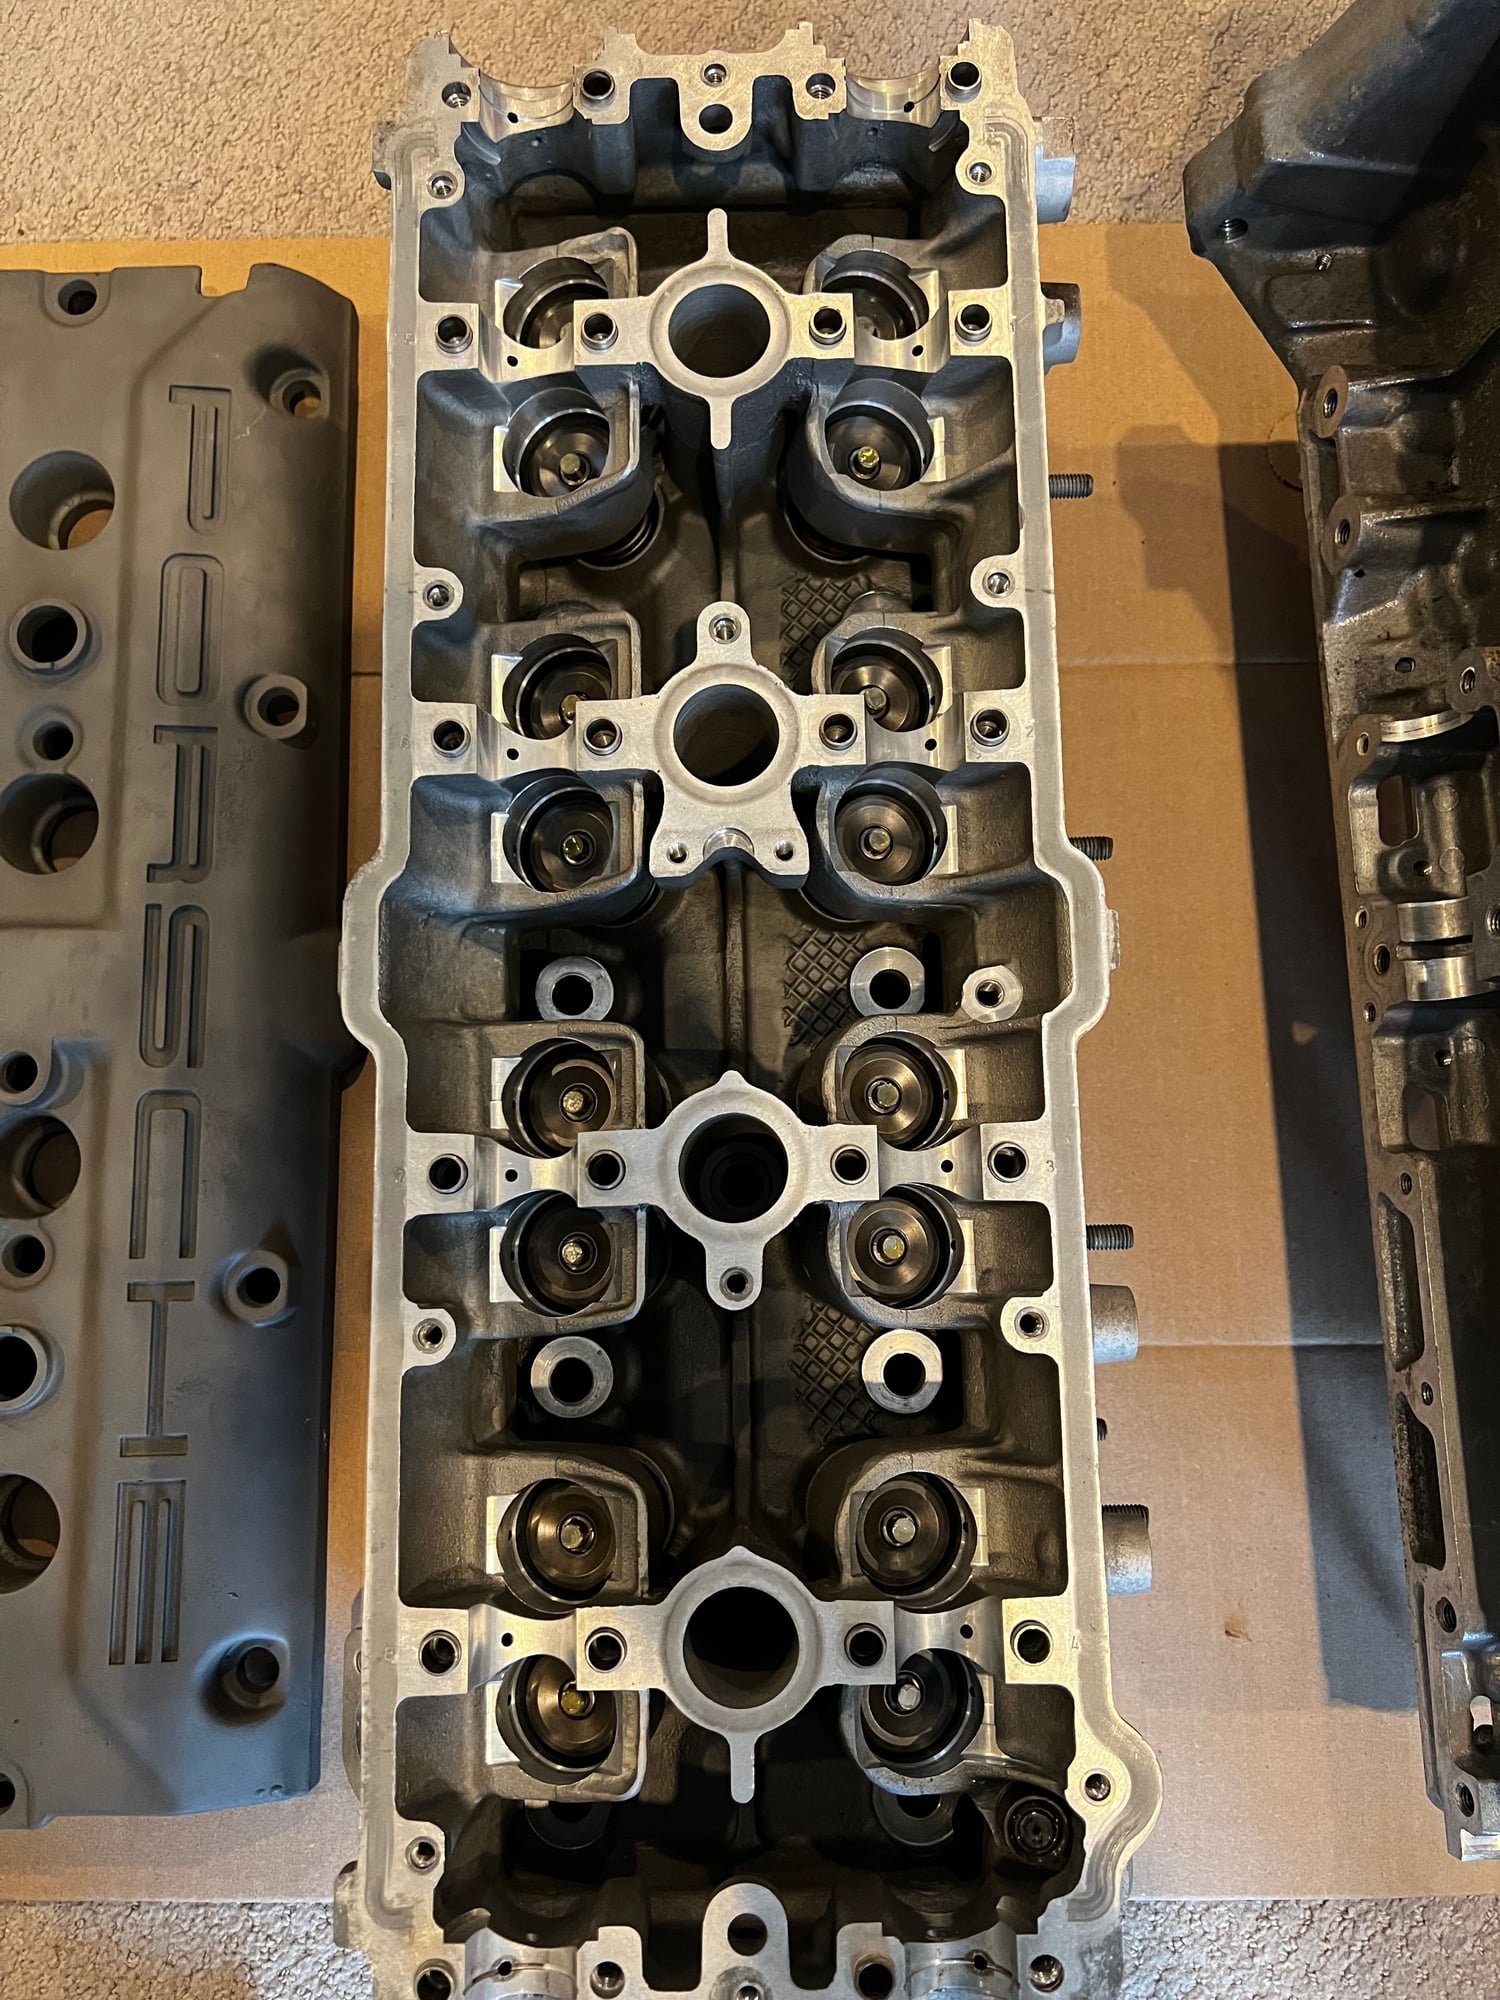 Engine - Complete - Porsche 944 S2 disassembled engine M44/41 104mm - Used - 1984 to 1992 Porsche 944 - Bethesda, MD 20814, United States